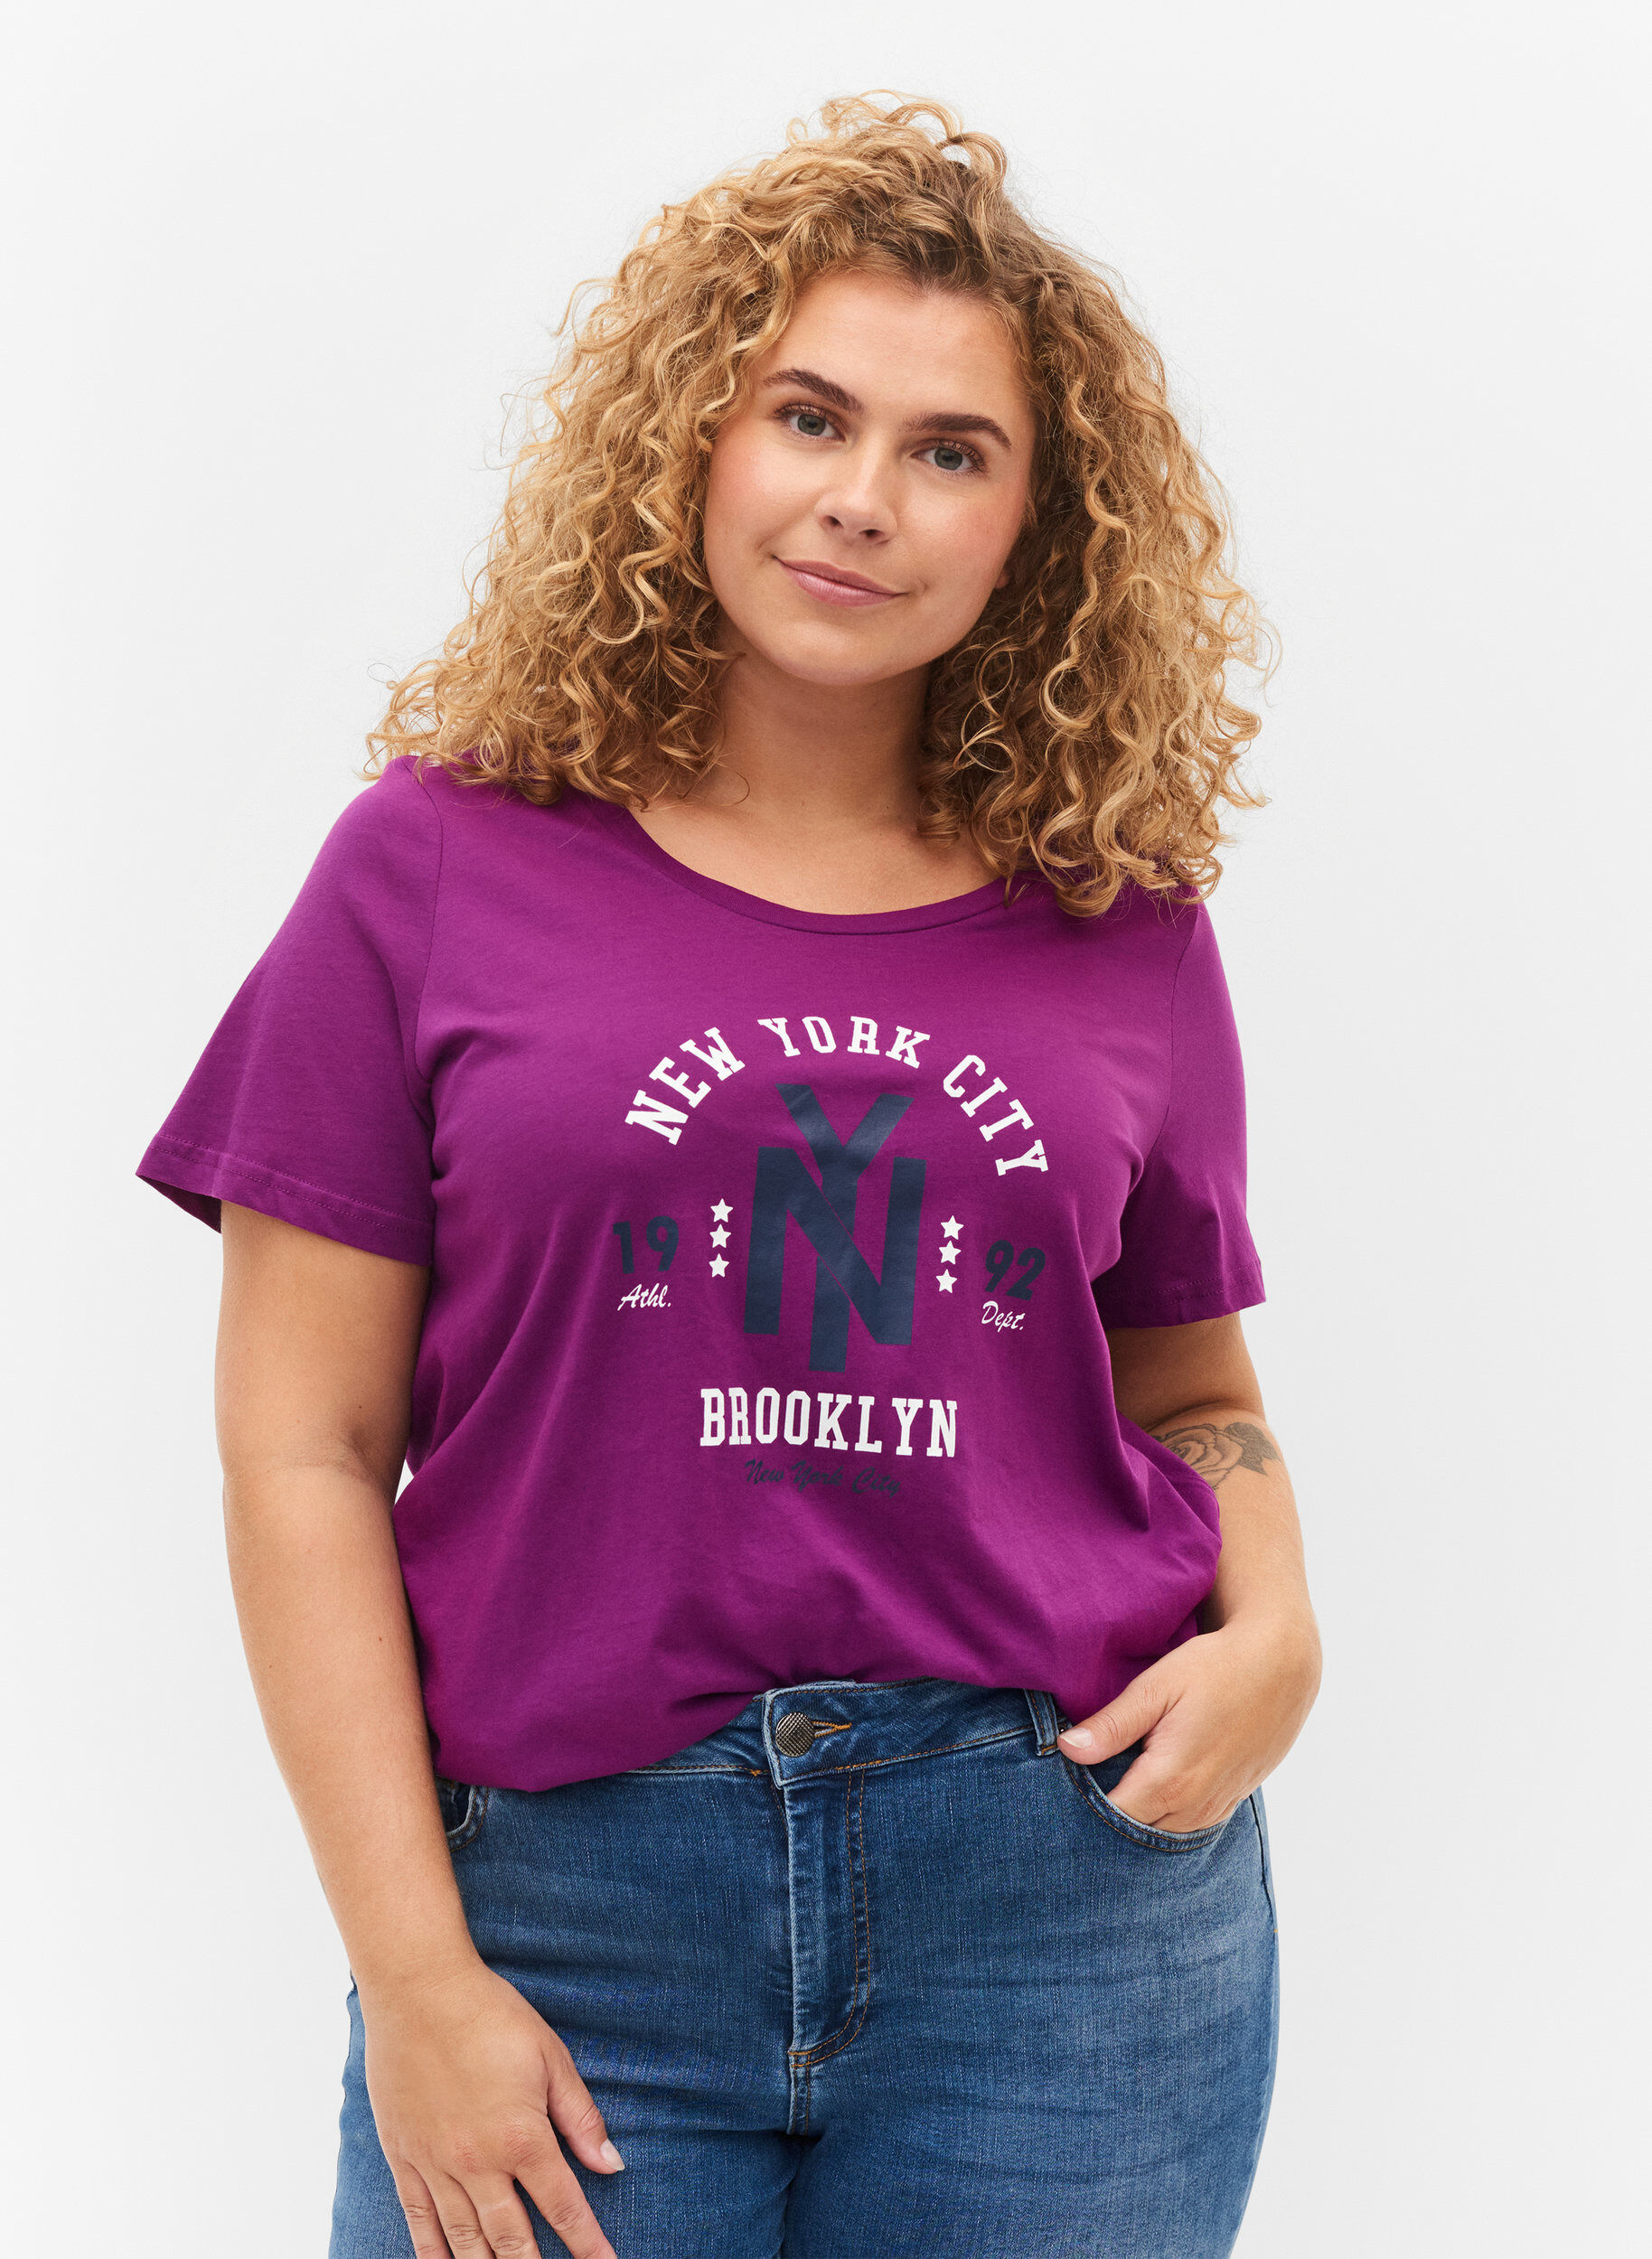 XL NEW Girls Lavender Purple Farm Girls Rock T-Shirt  Sizes M 